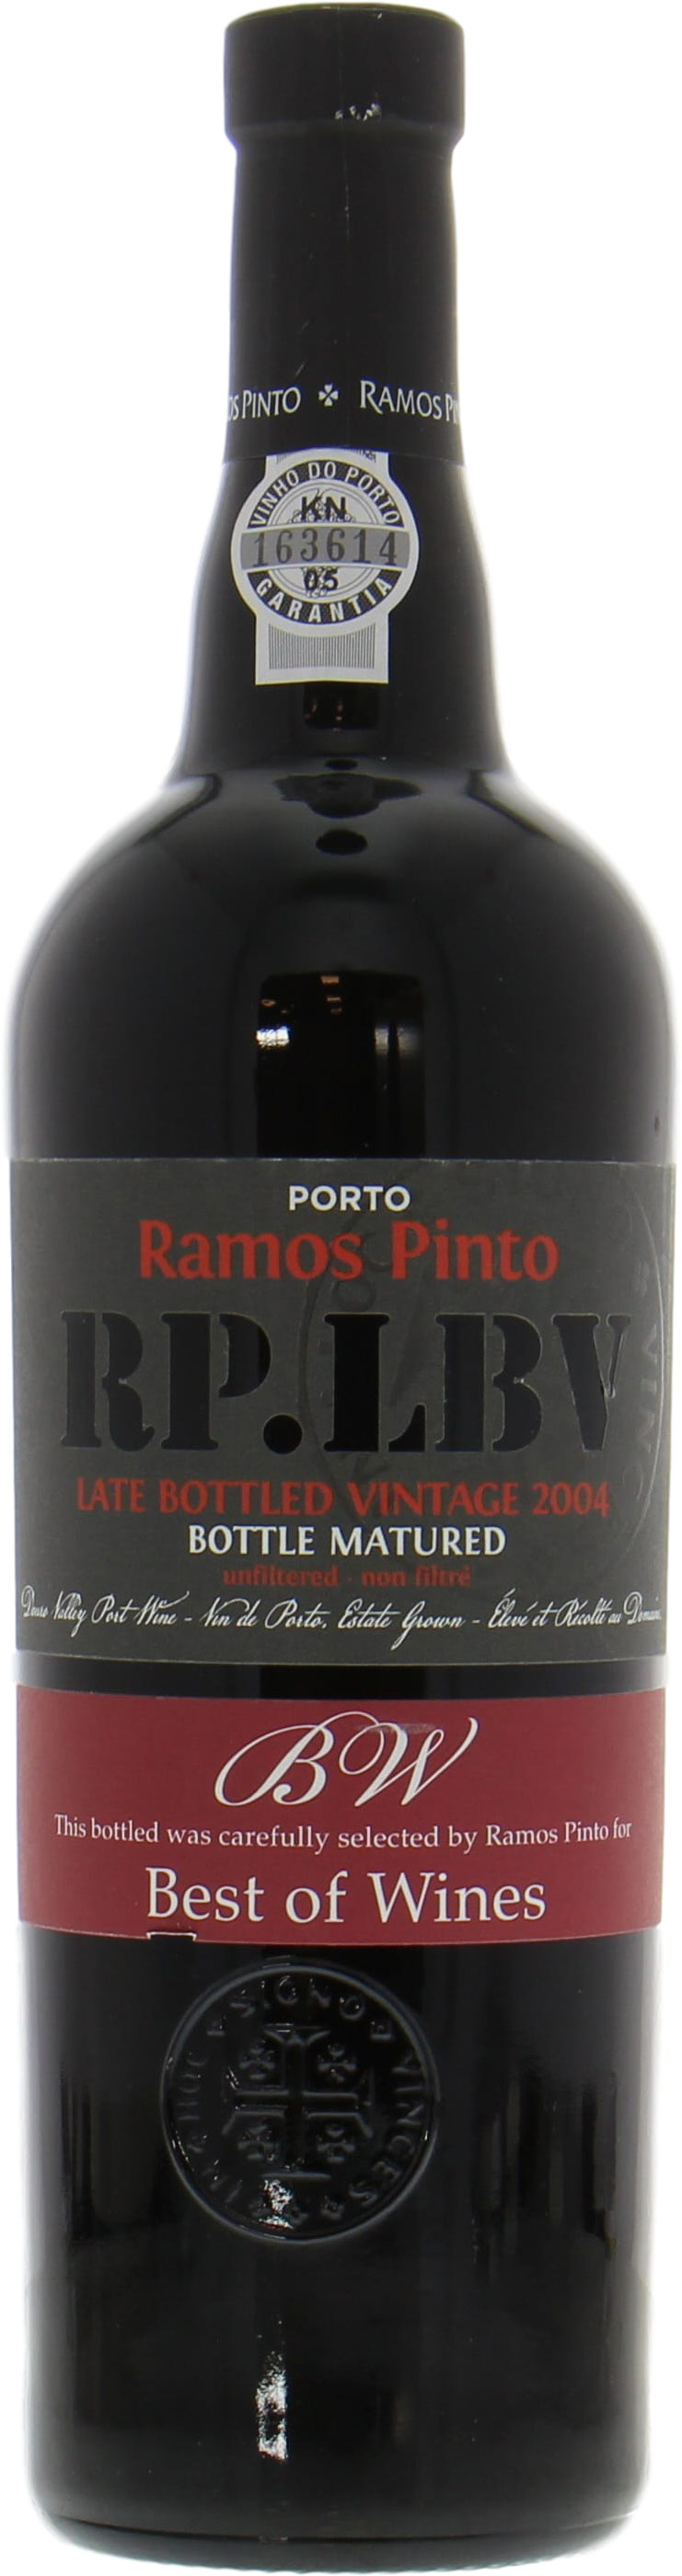 Ramos Pinto - Late Bottled Vintage Port Bottle matured 2004